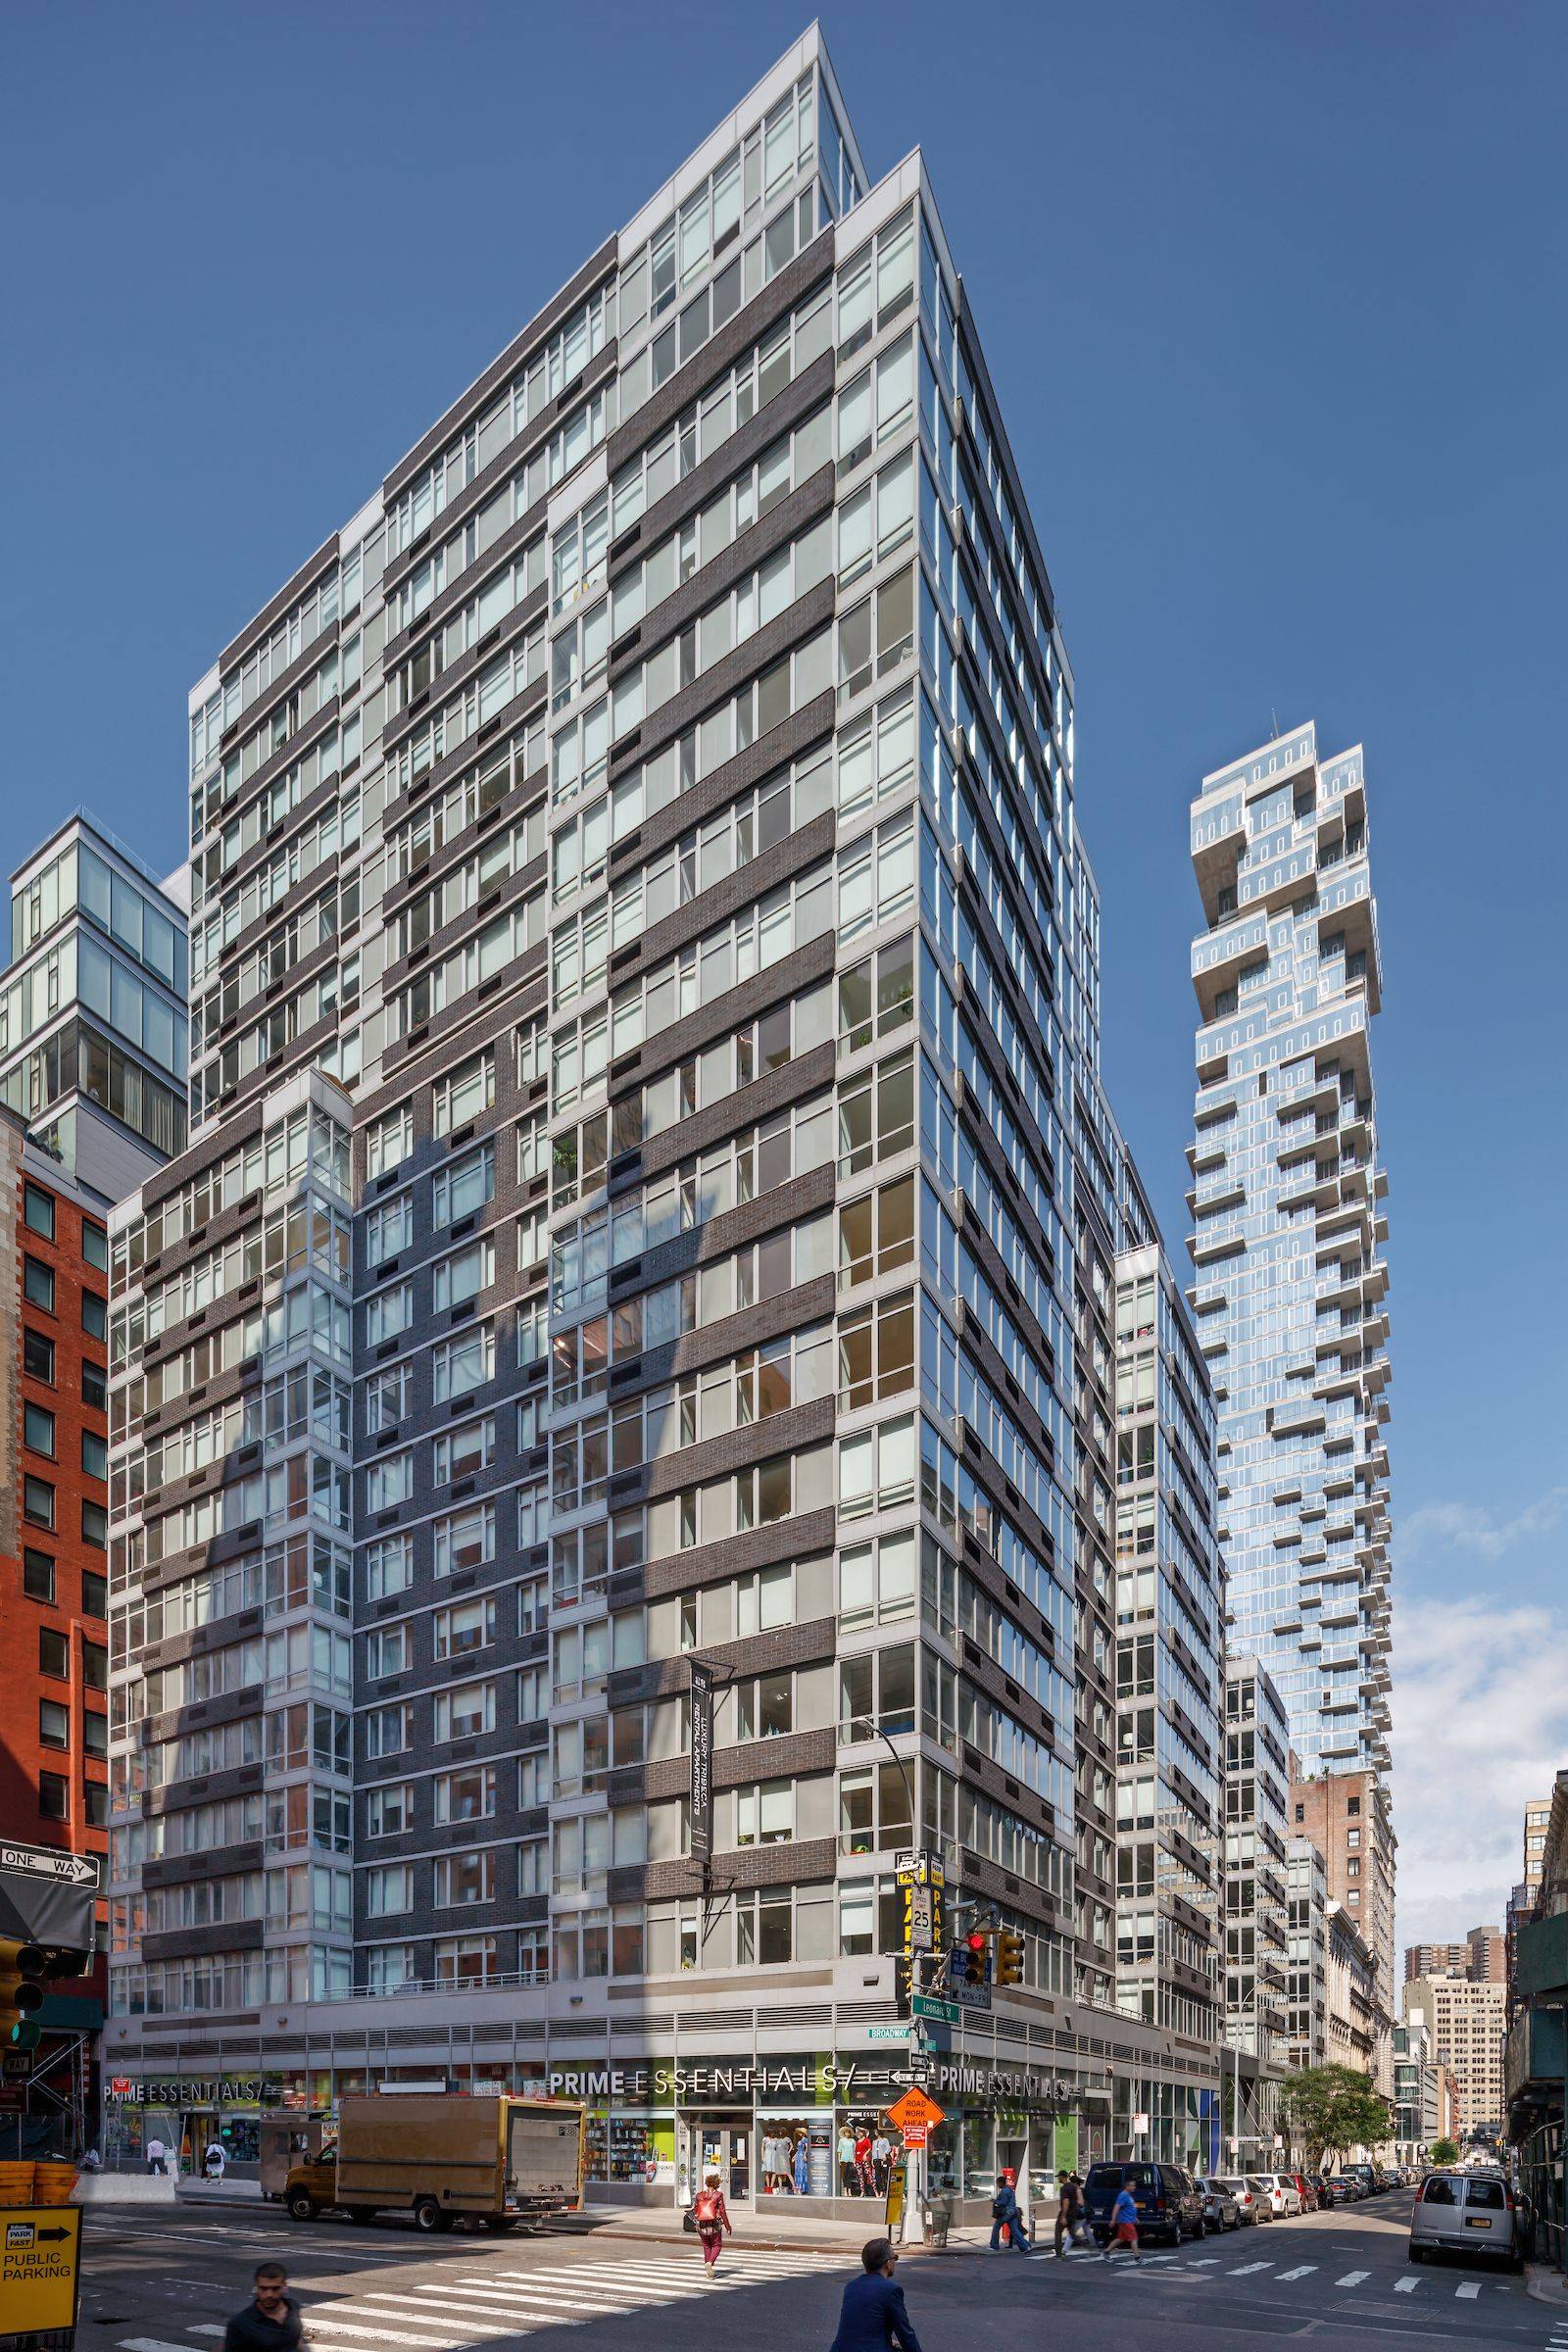 88 Leonard offers elegant, doorman apartment living in the pulsating Manhattan neighborhood known as Tribeca.